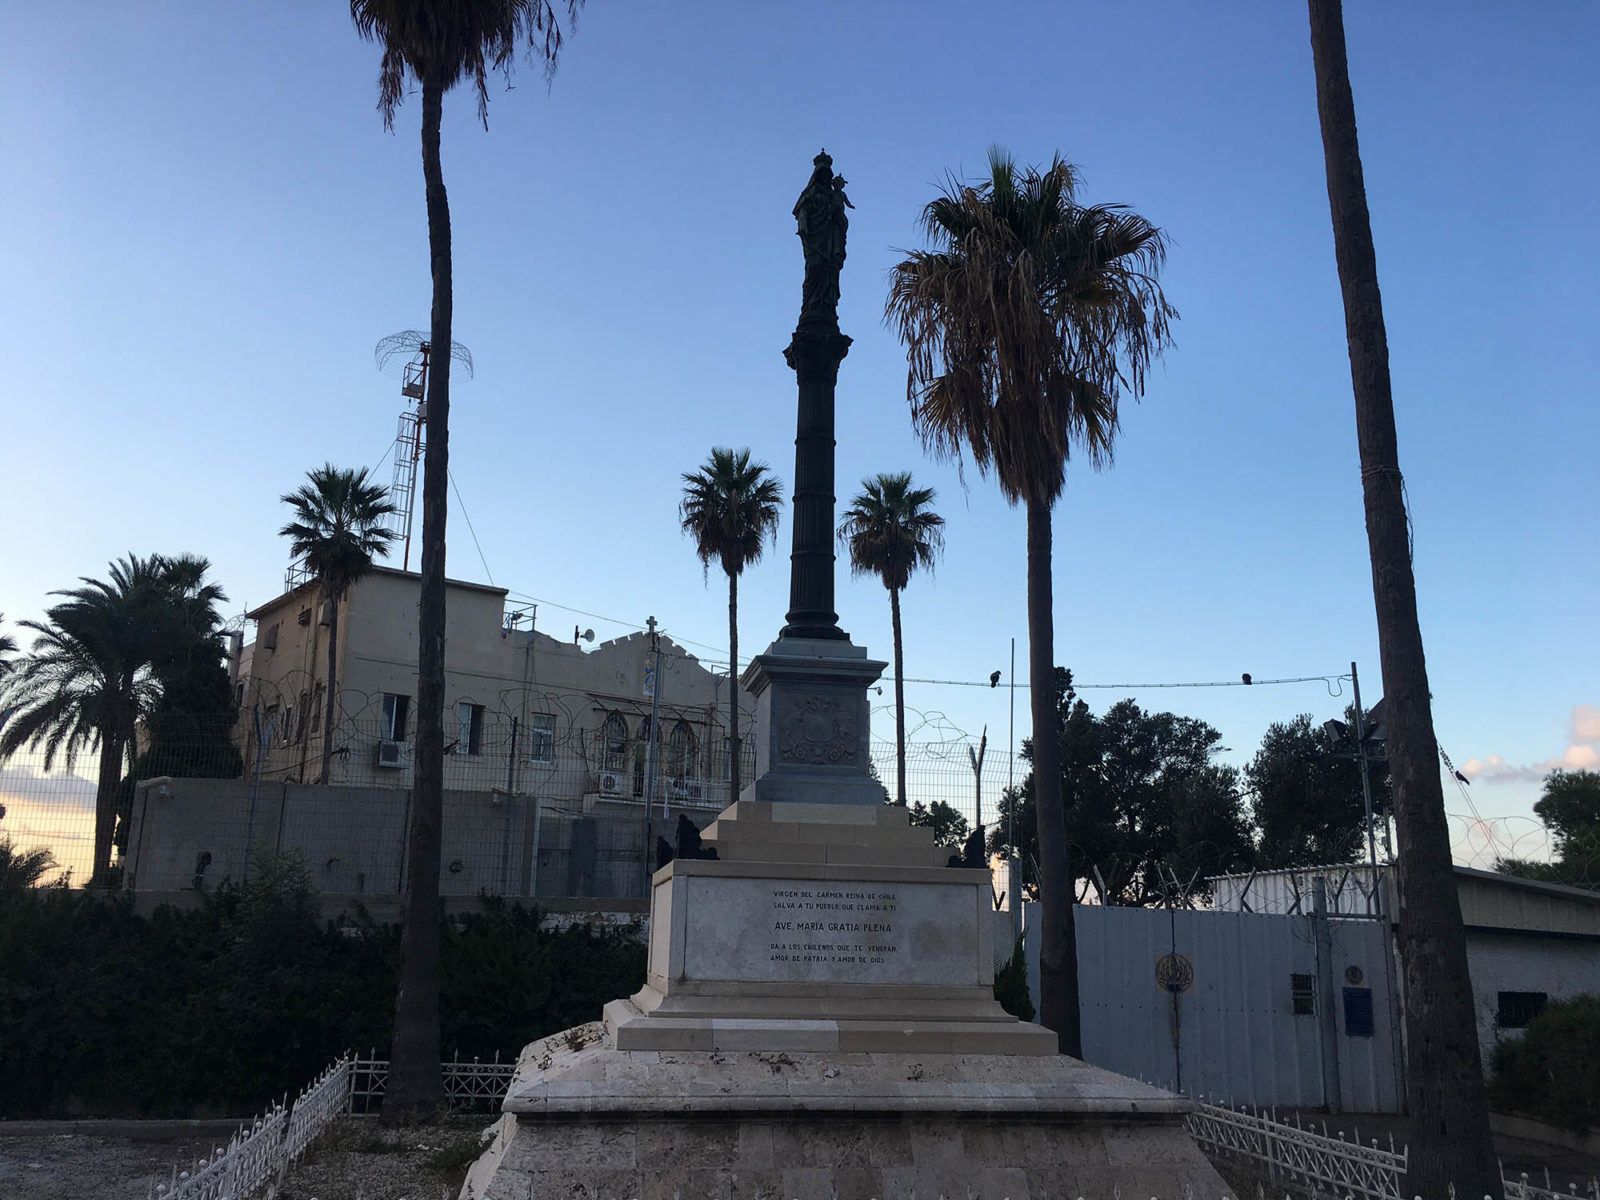 Statue near Stella Maris on Mount Carmel